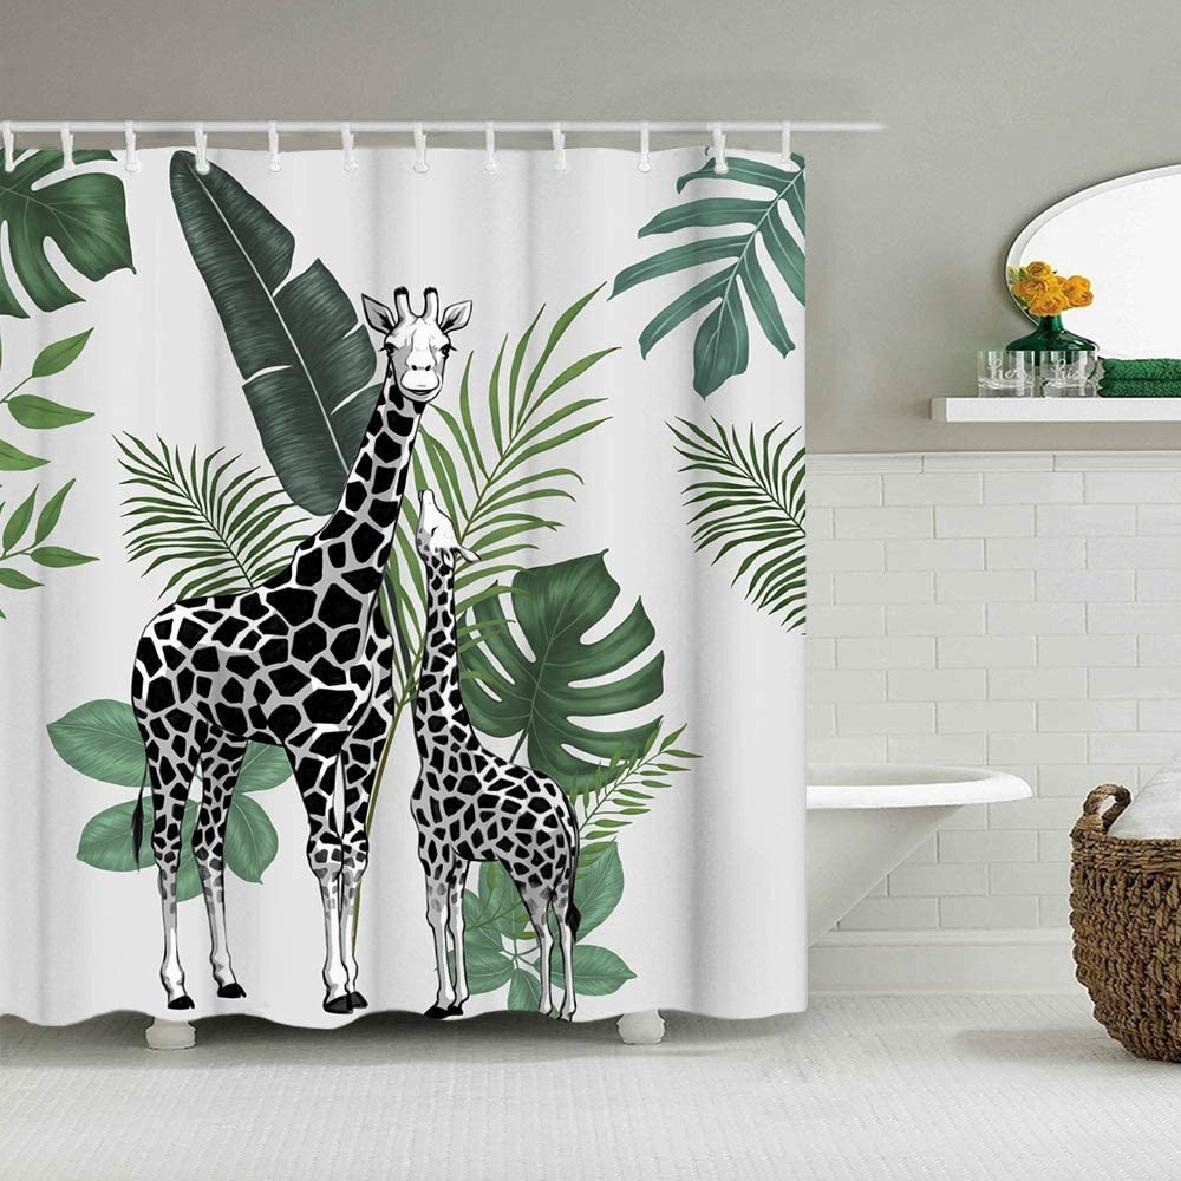 Cute Giraffe Fabric Liner Shower Curtain Set Bathroom Accessories Waterproof New 